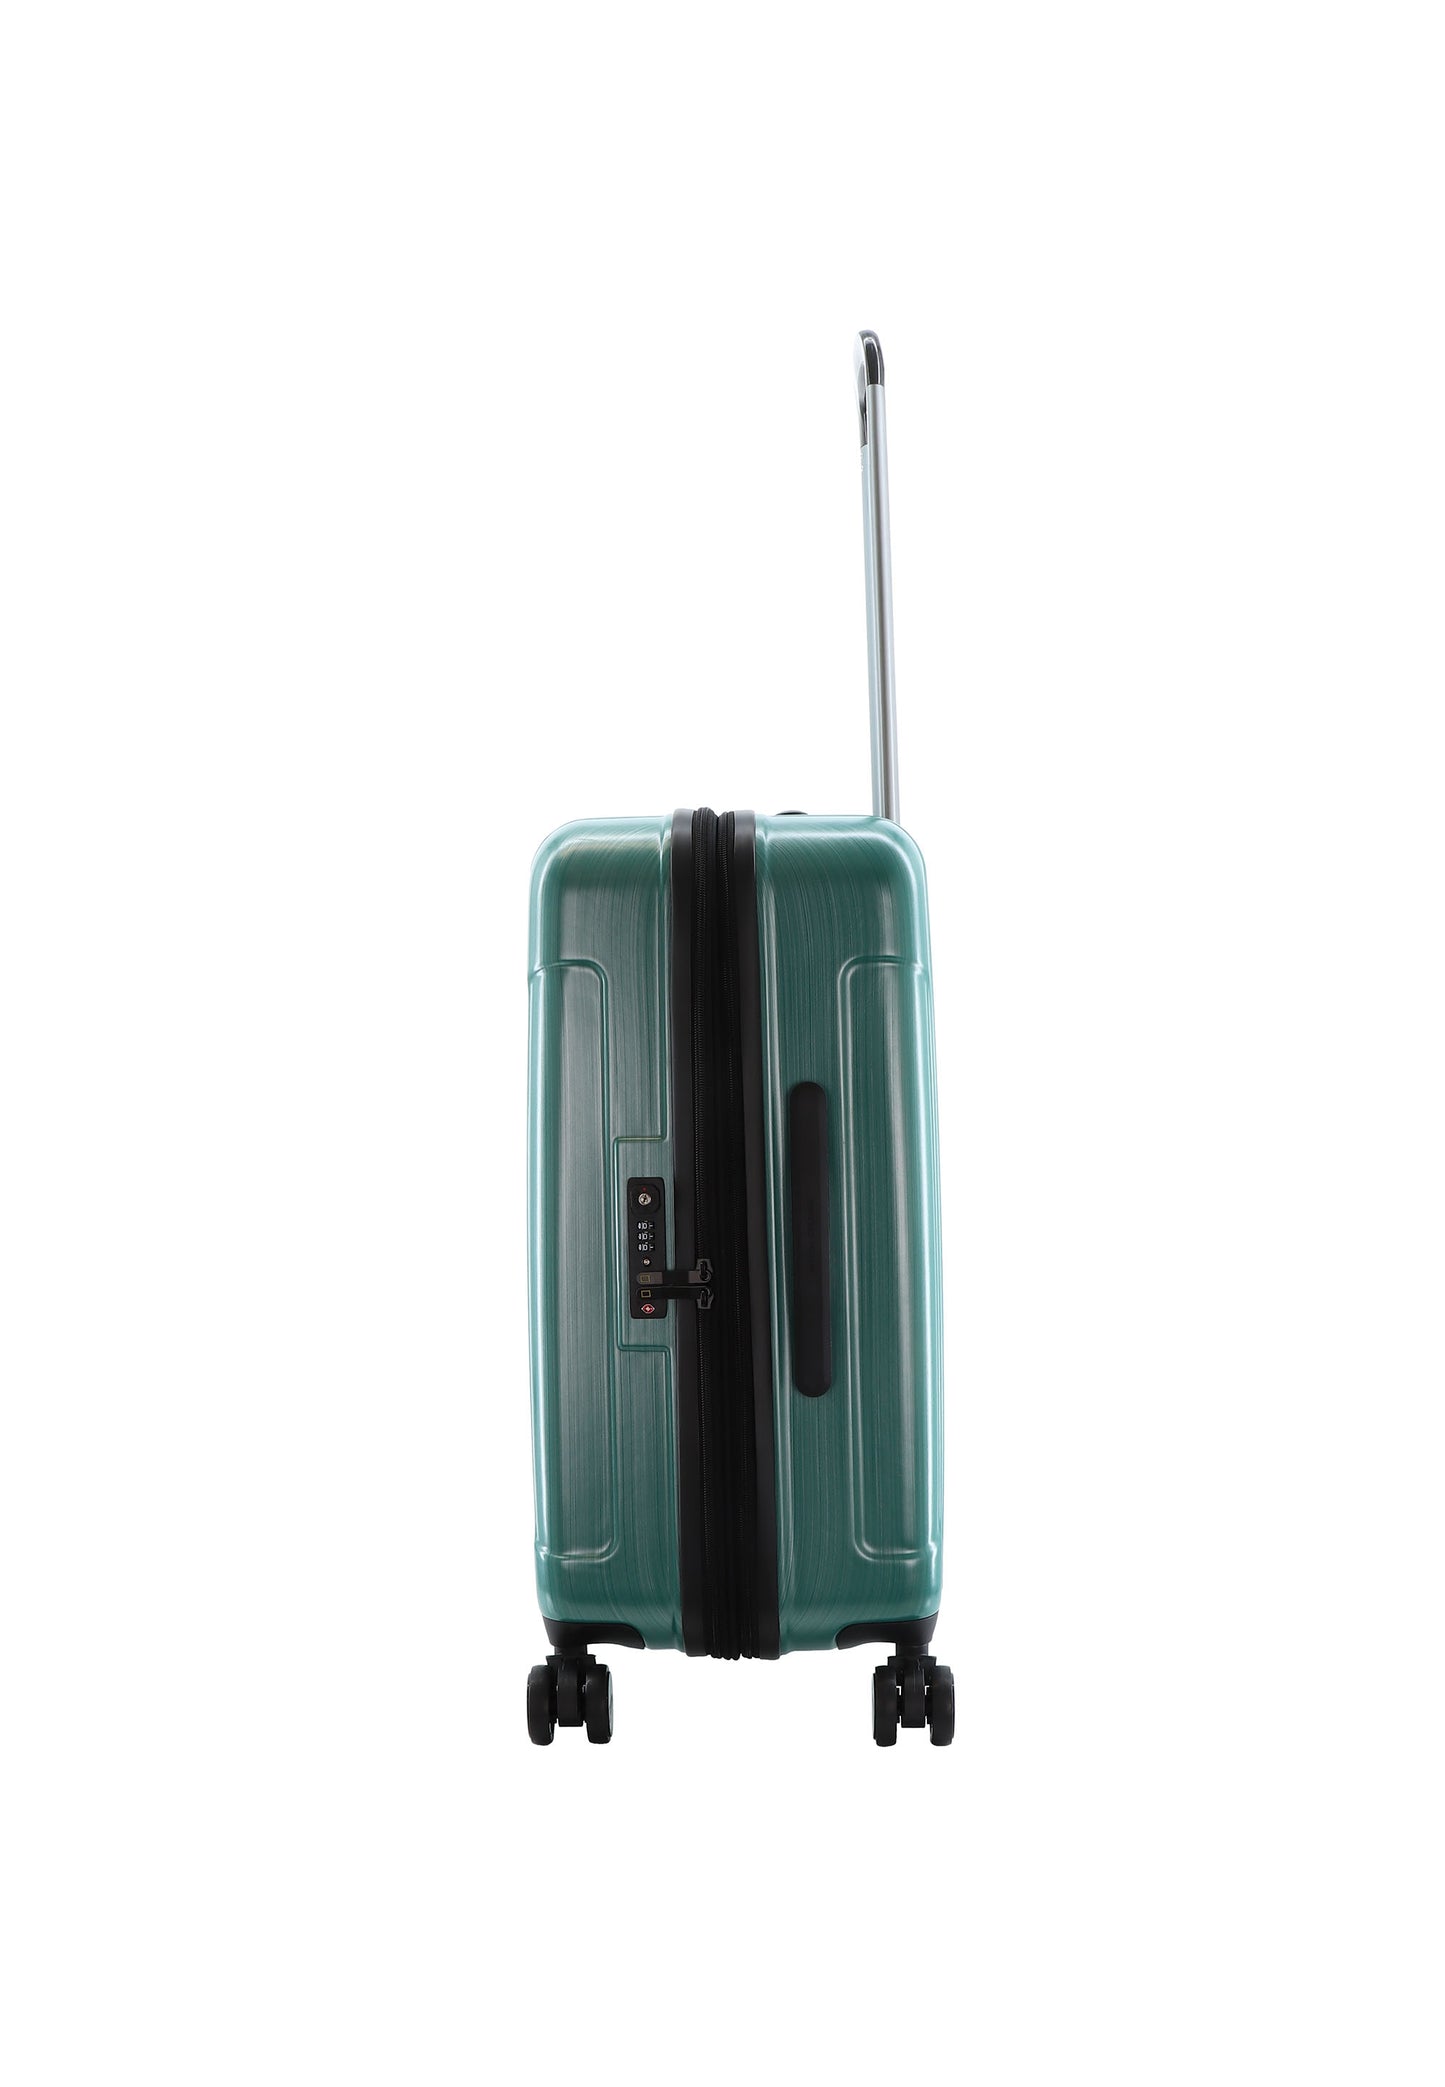 National Geographic Hard Case / Trolley / Travel Case - 67 cm (Moyen) - Transit - Jade